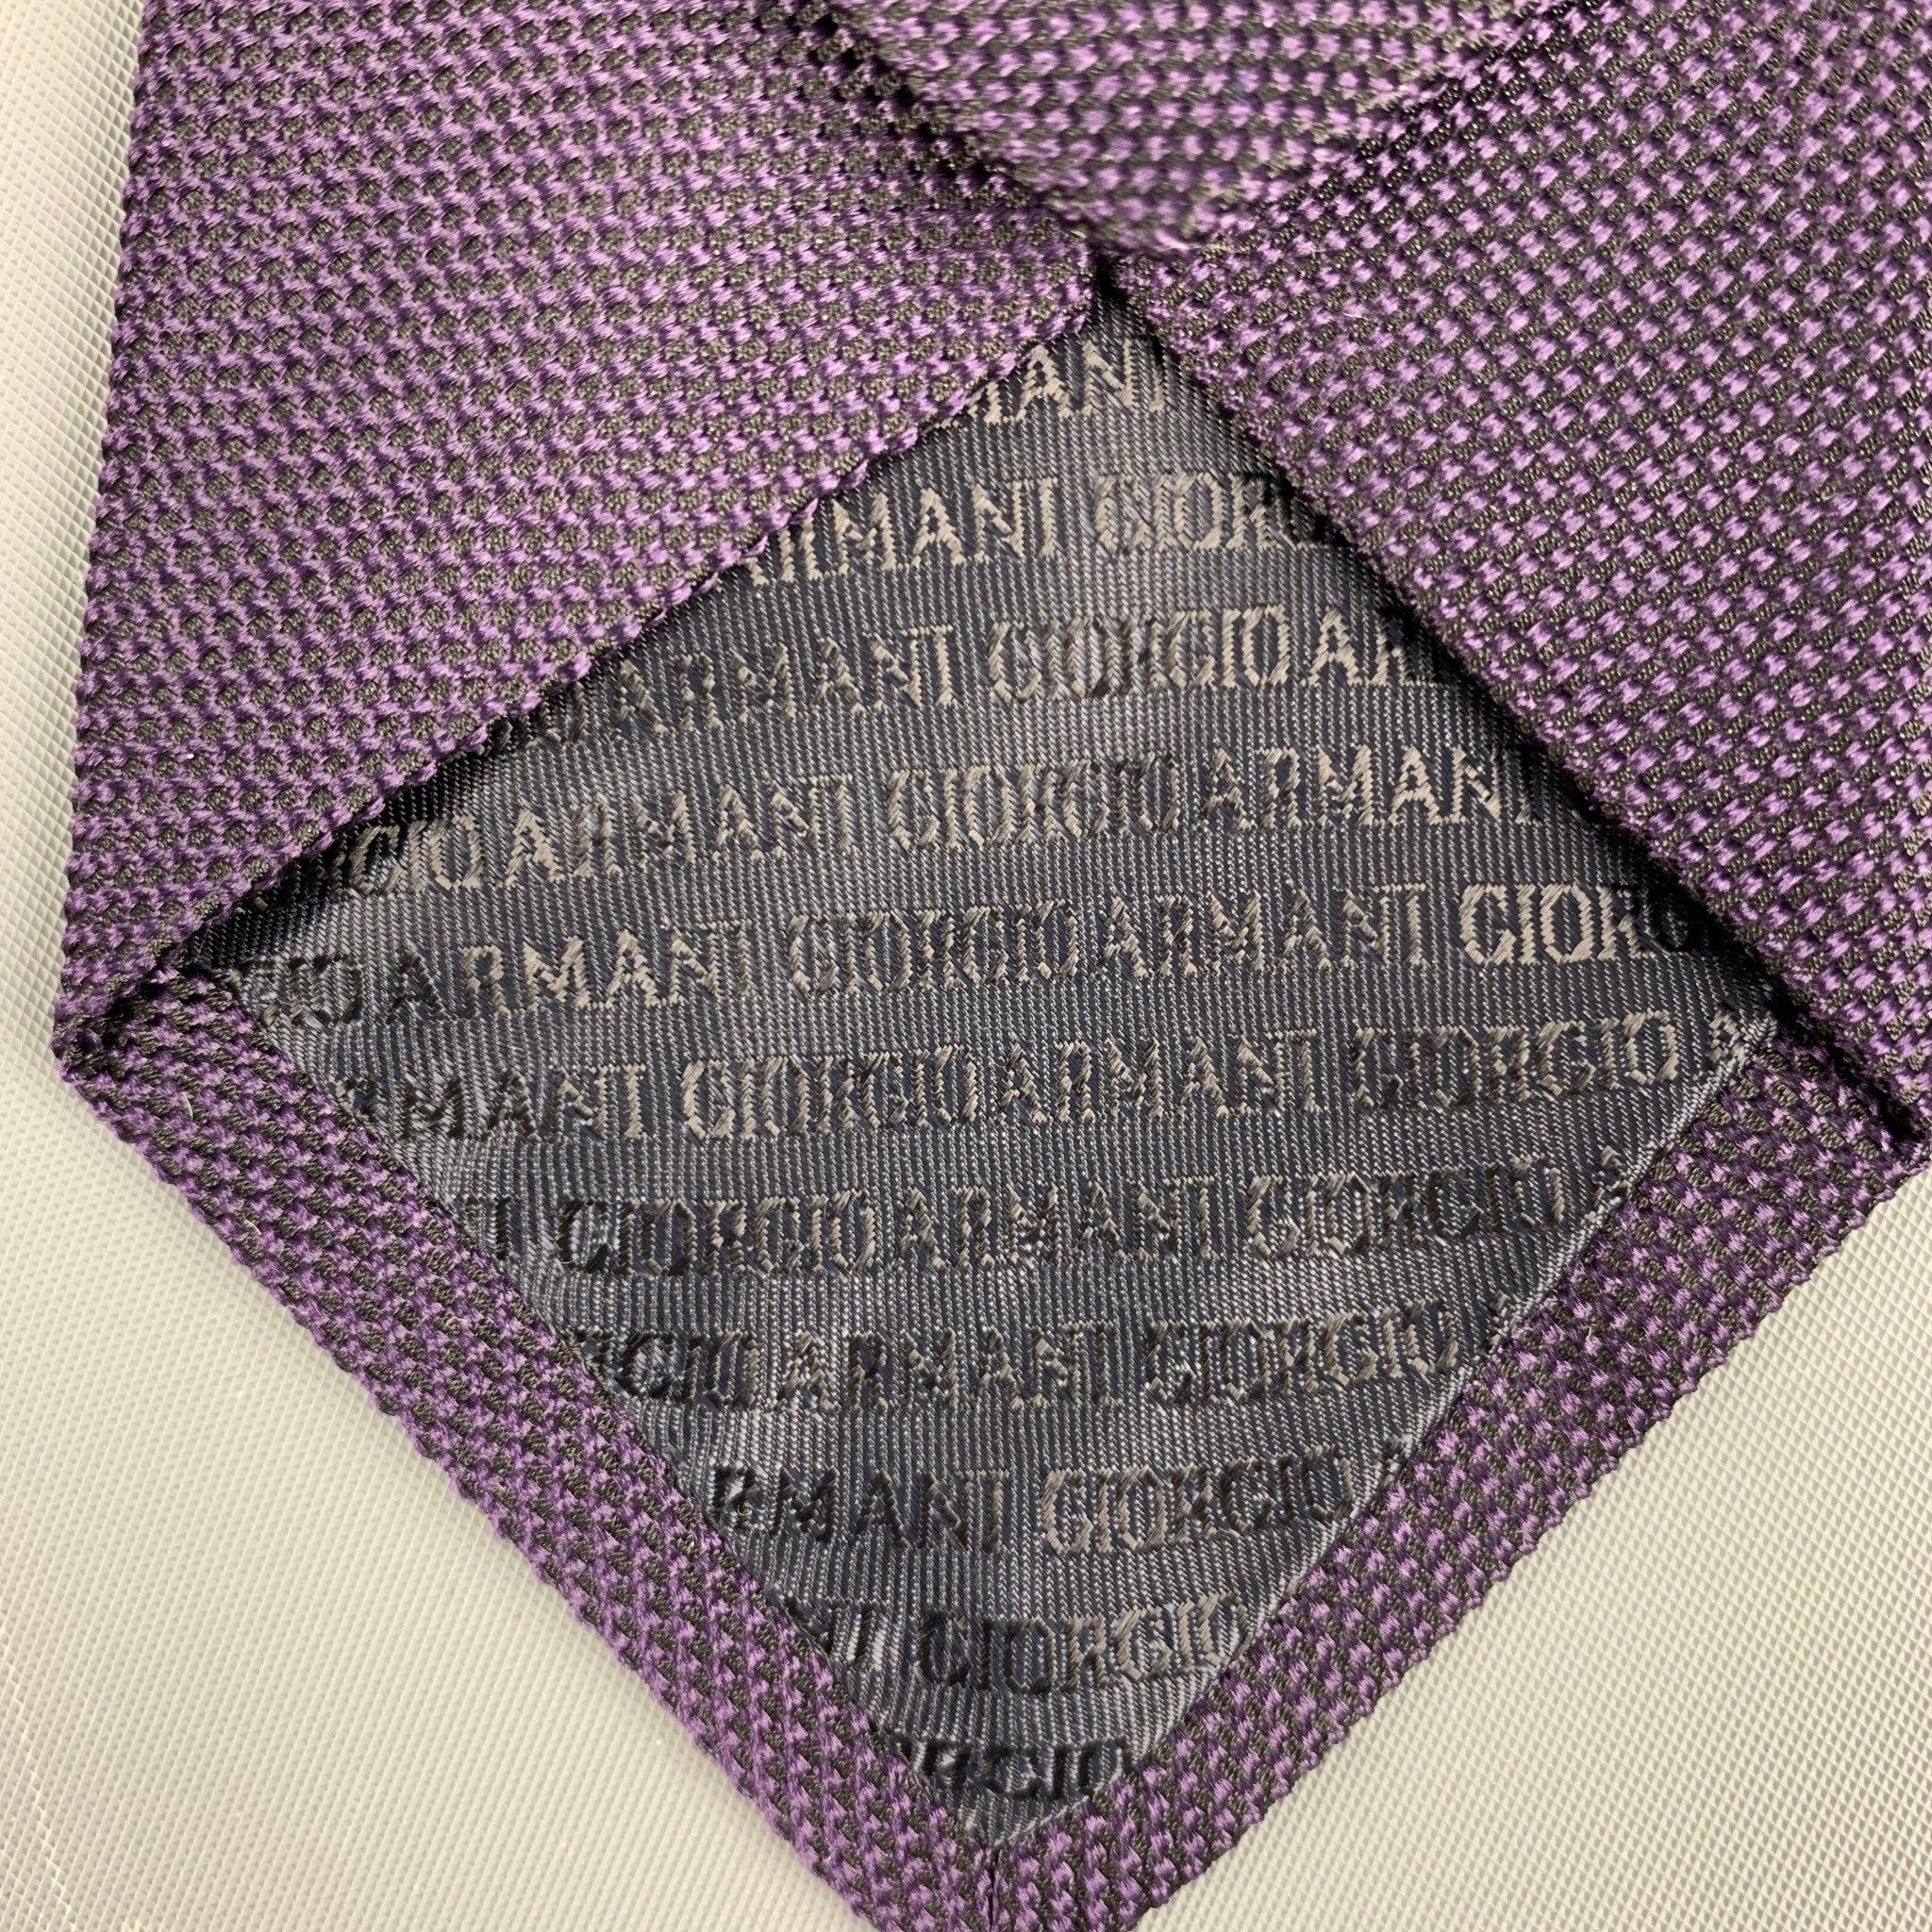 GIORGIO ARMANI Purple Black Textured Silk Tie 1